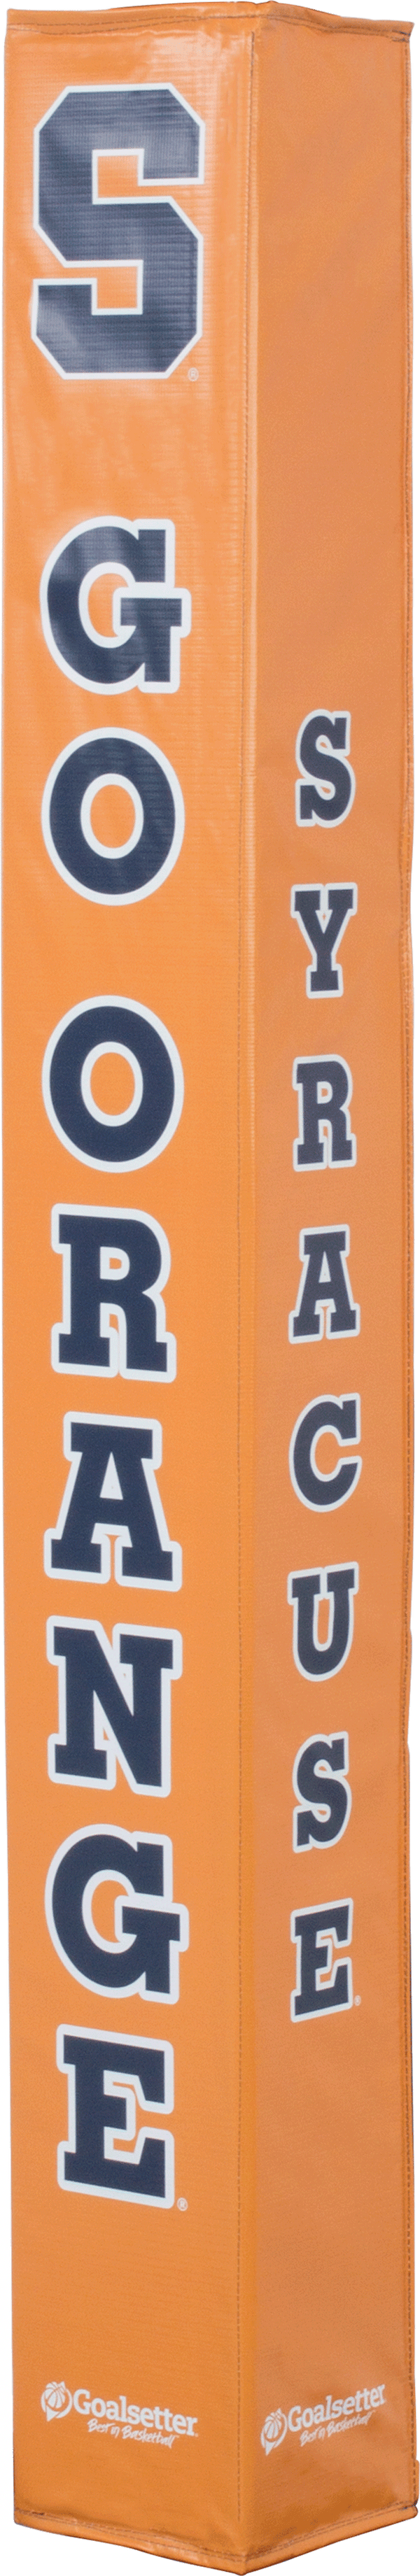 Goalsetter Collegiate Basketball Pole Pad - Syracuse Orangemen (Orange)